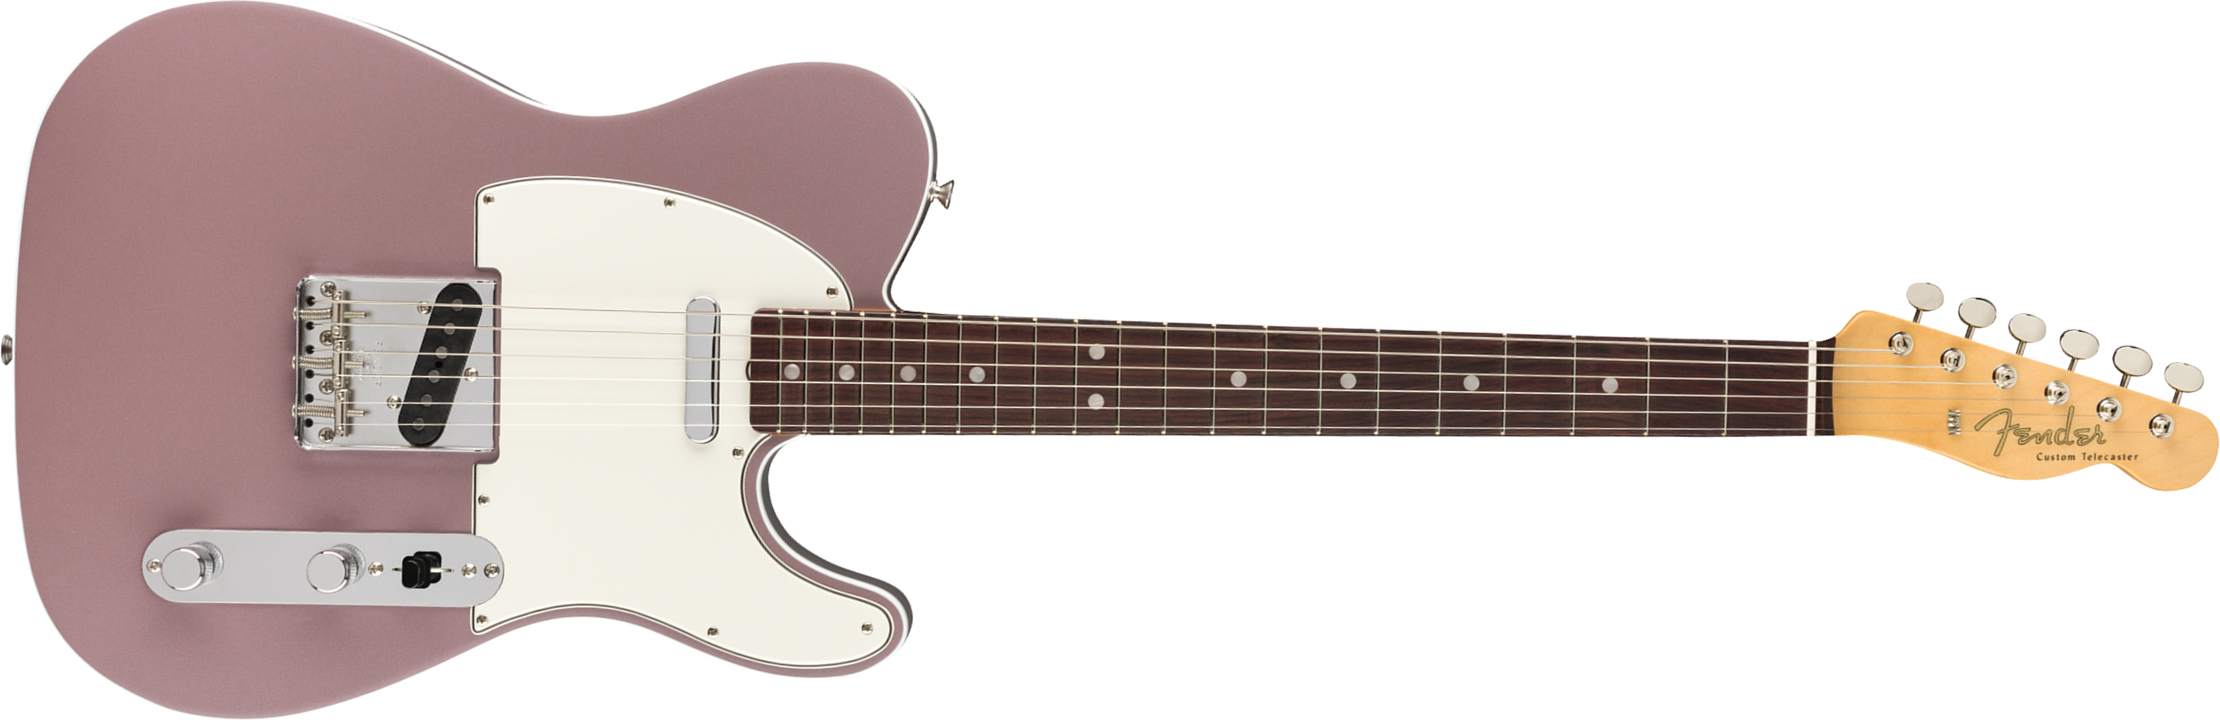 Fender Tele '60s American Original Usa Ss Rw - Burgundy Mist Metallic - Guitarra eléctrica con forma de tel - Main picture